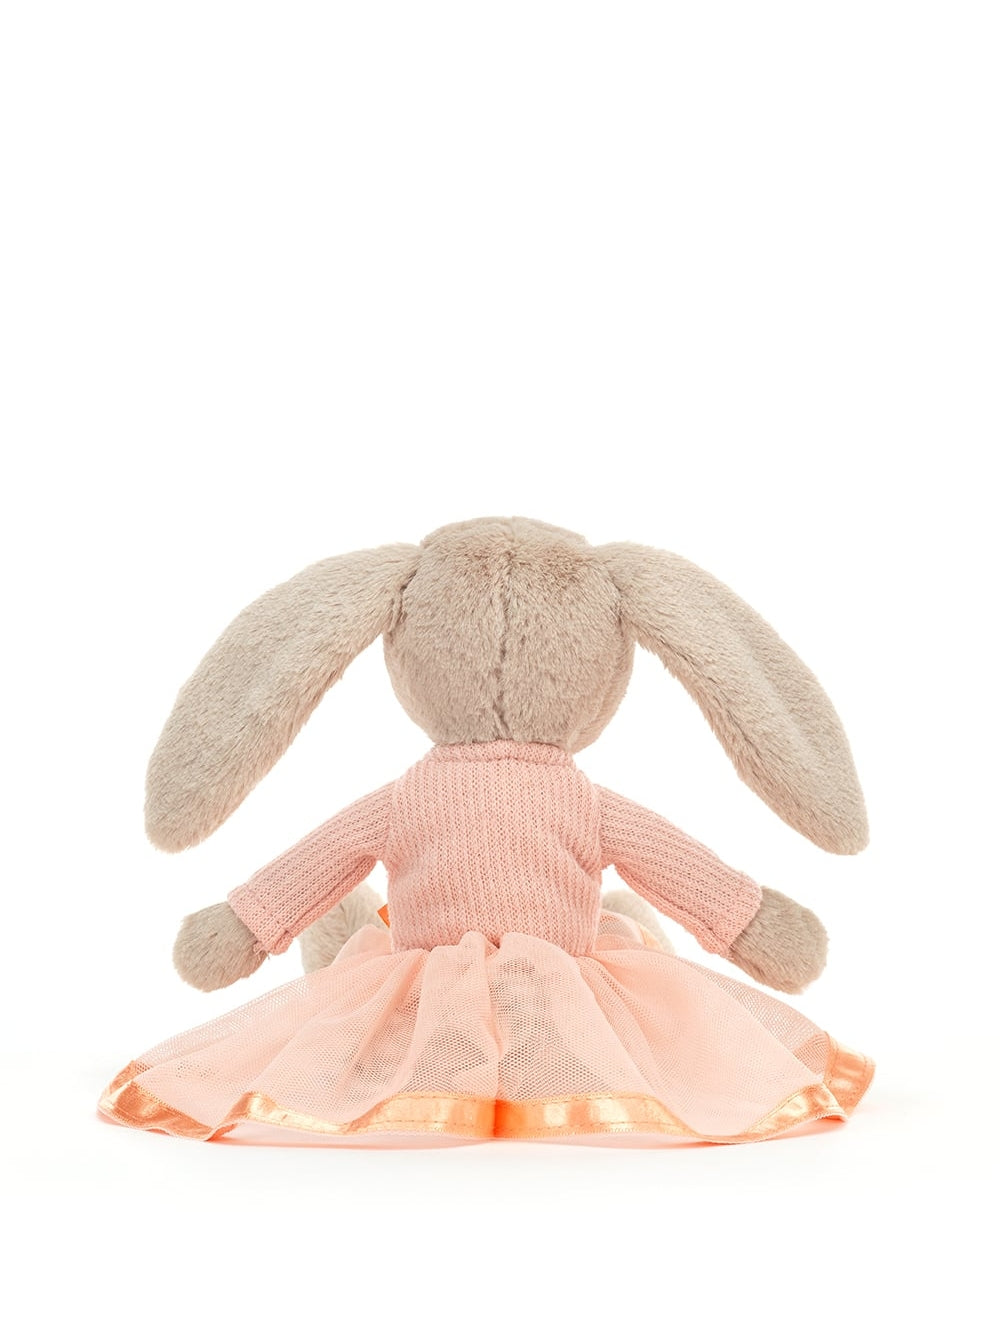 Lottie Ballet Bunny